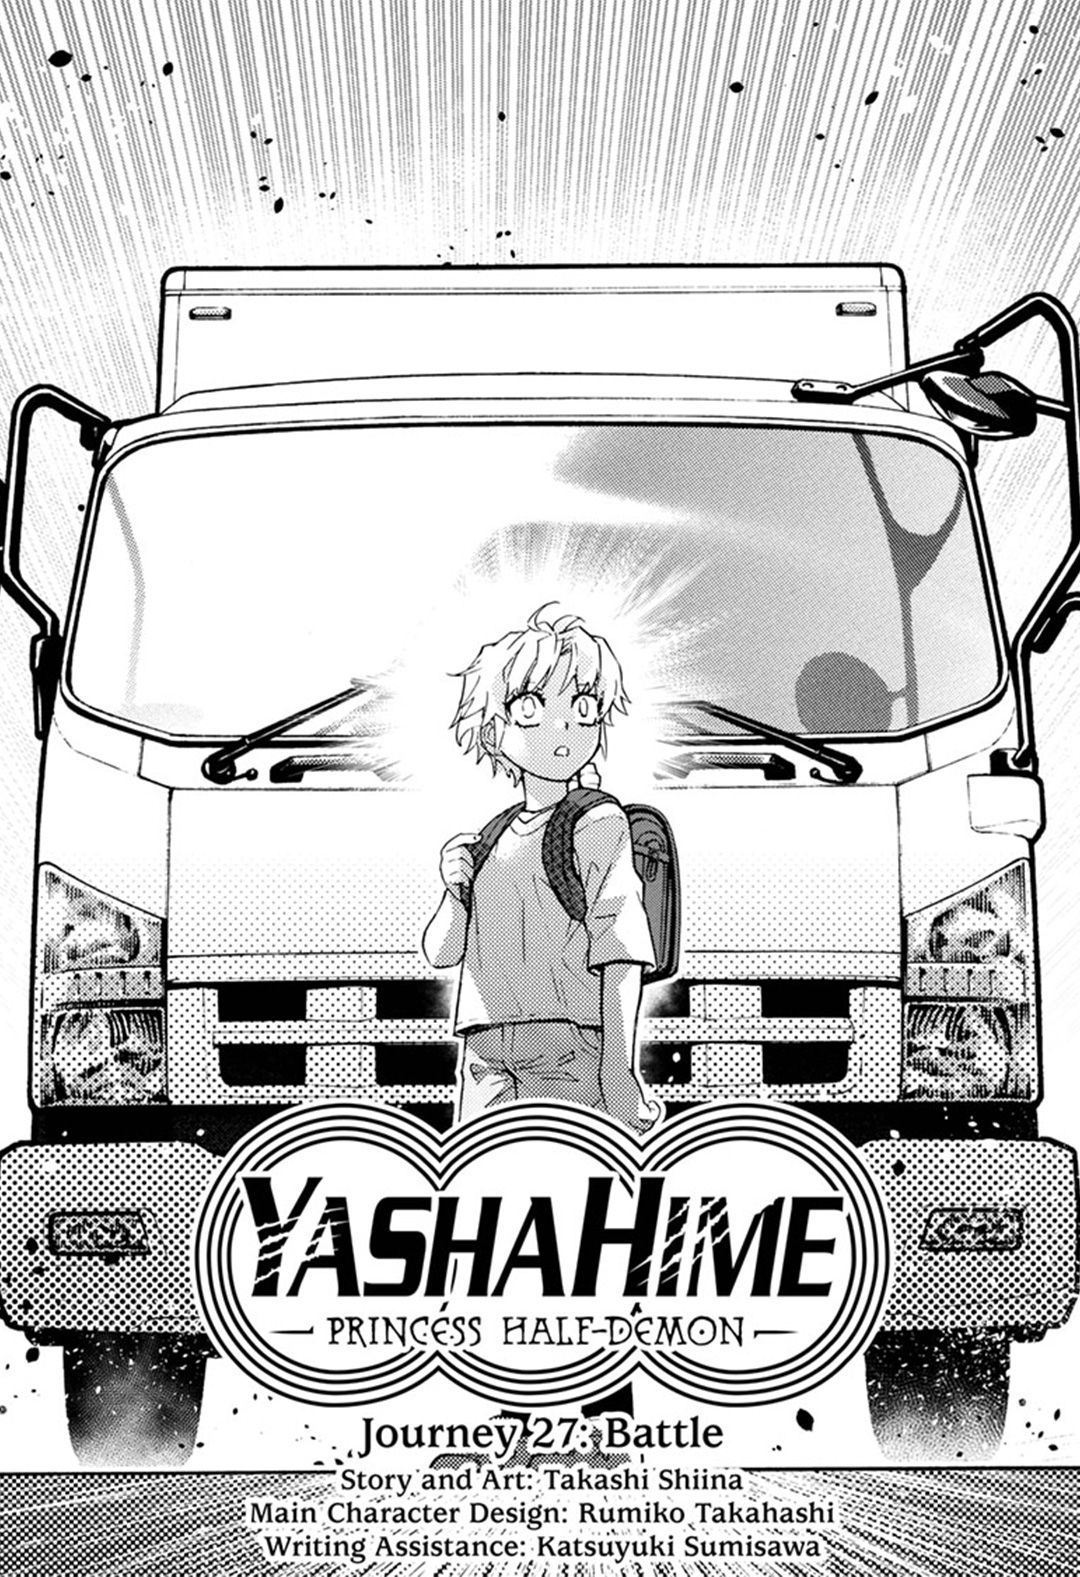 VIZ  Read Yashahime: Princess Half-Demon, Chapter 15 - Explore